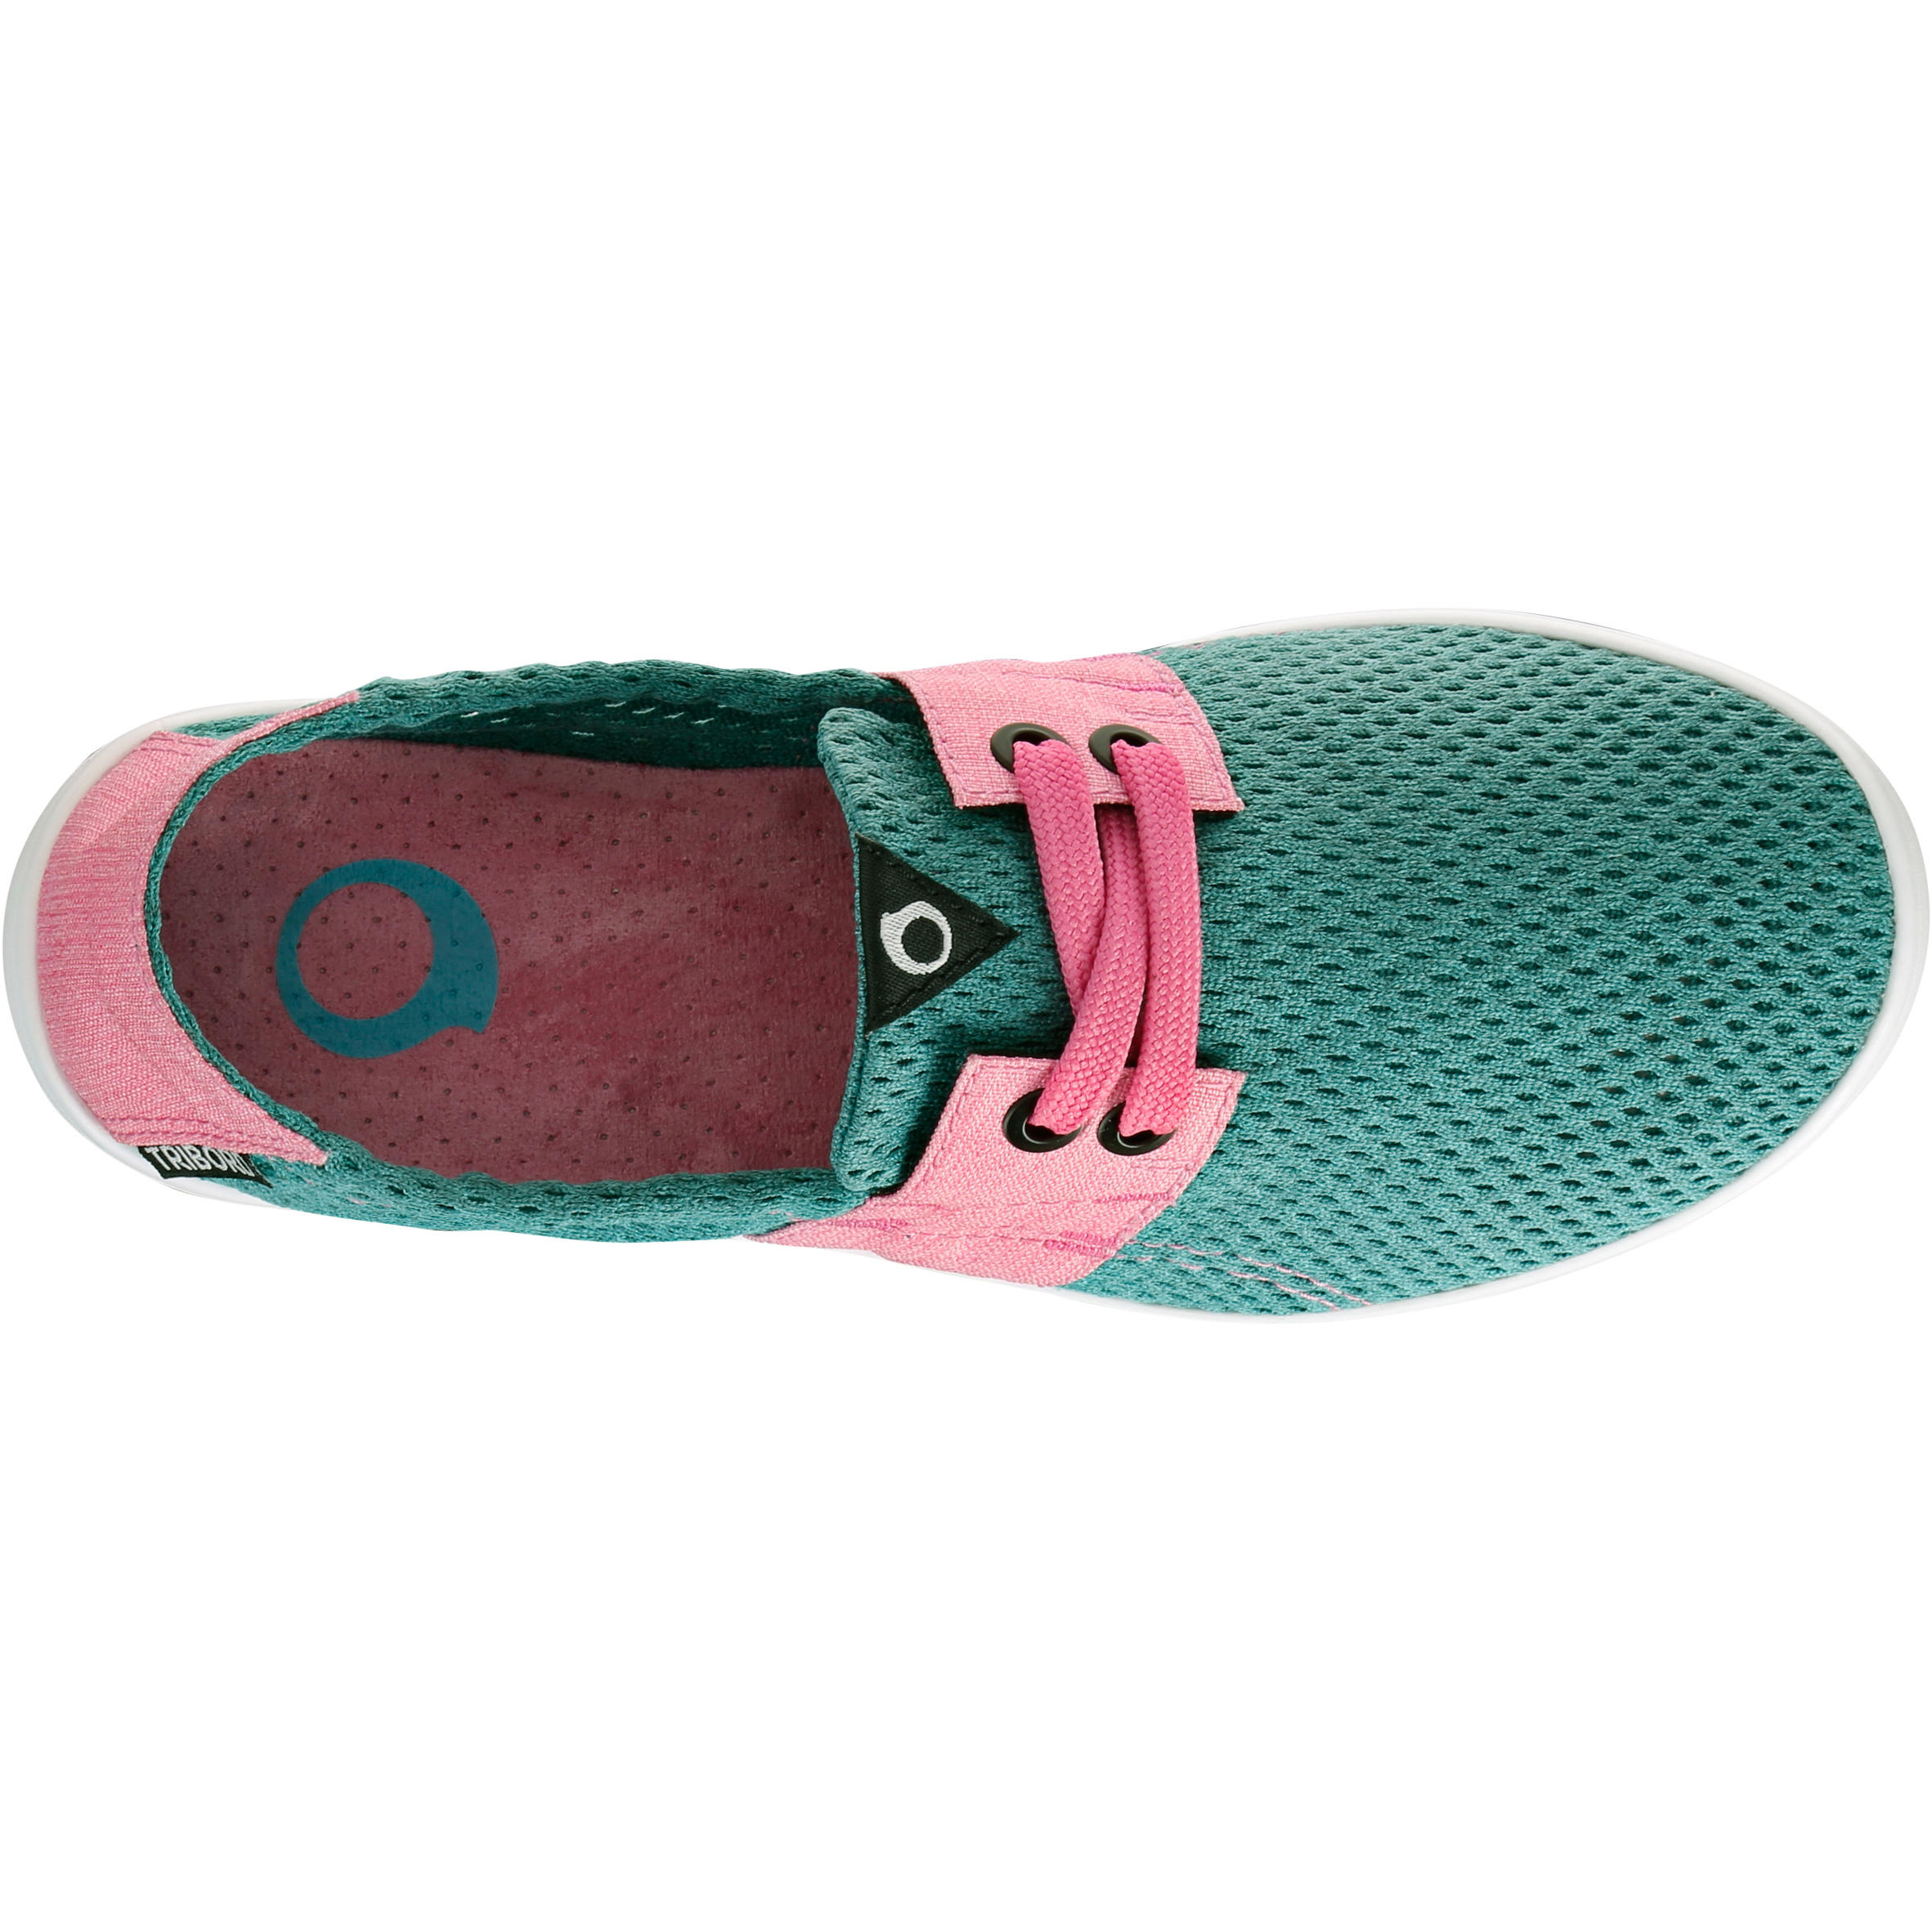 AREETA JR kids' beach shoes - Green pink 7/10